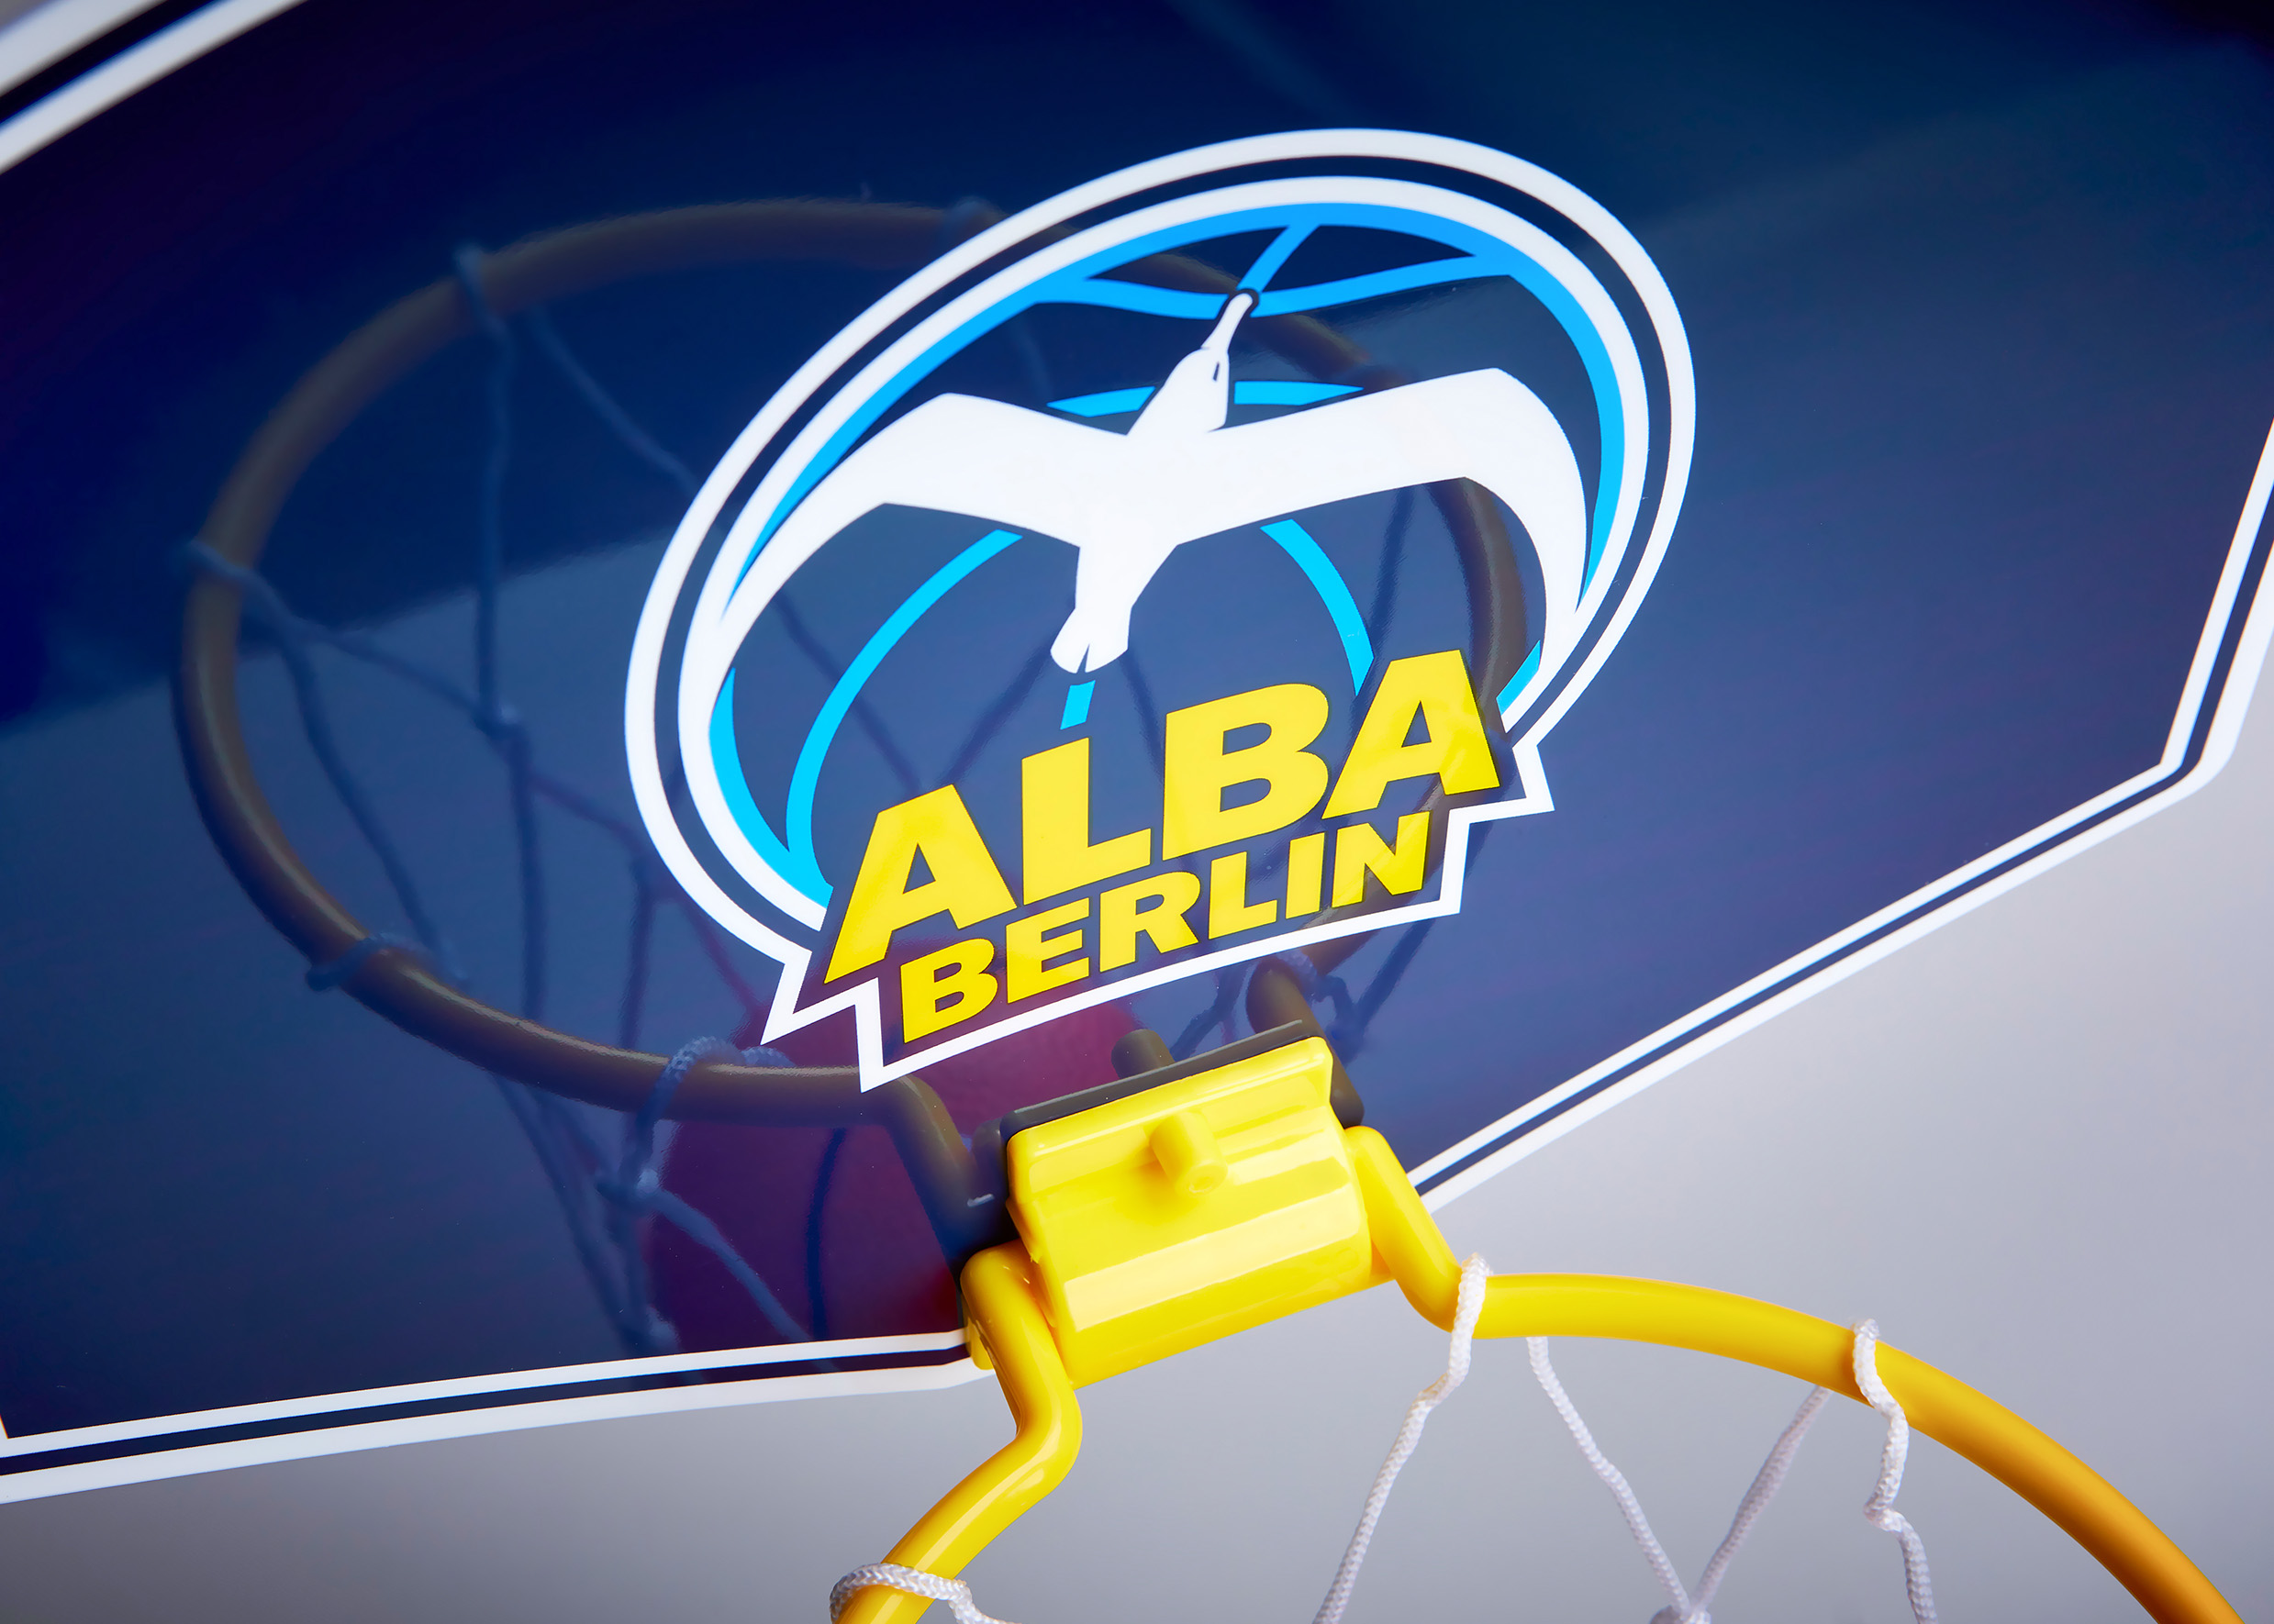 Fanartikel herstellen lassen, Fanartikelhersteller, Basketbalkorb Alba Berlin